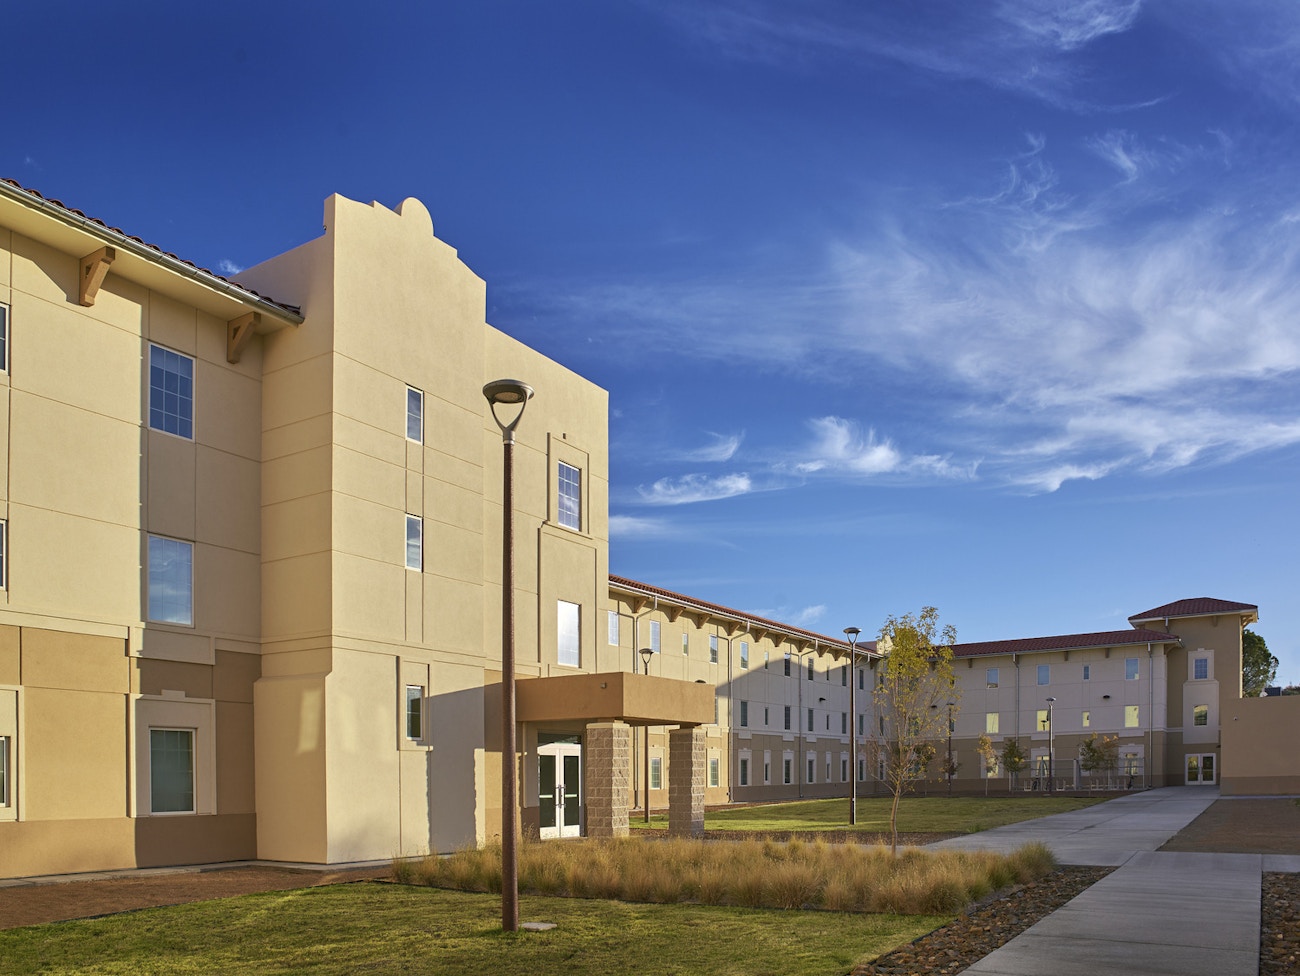                         NMSU New Residence Hall
                    